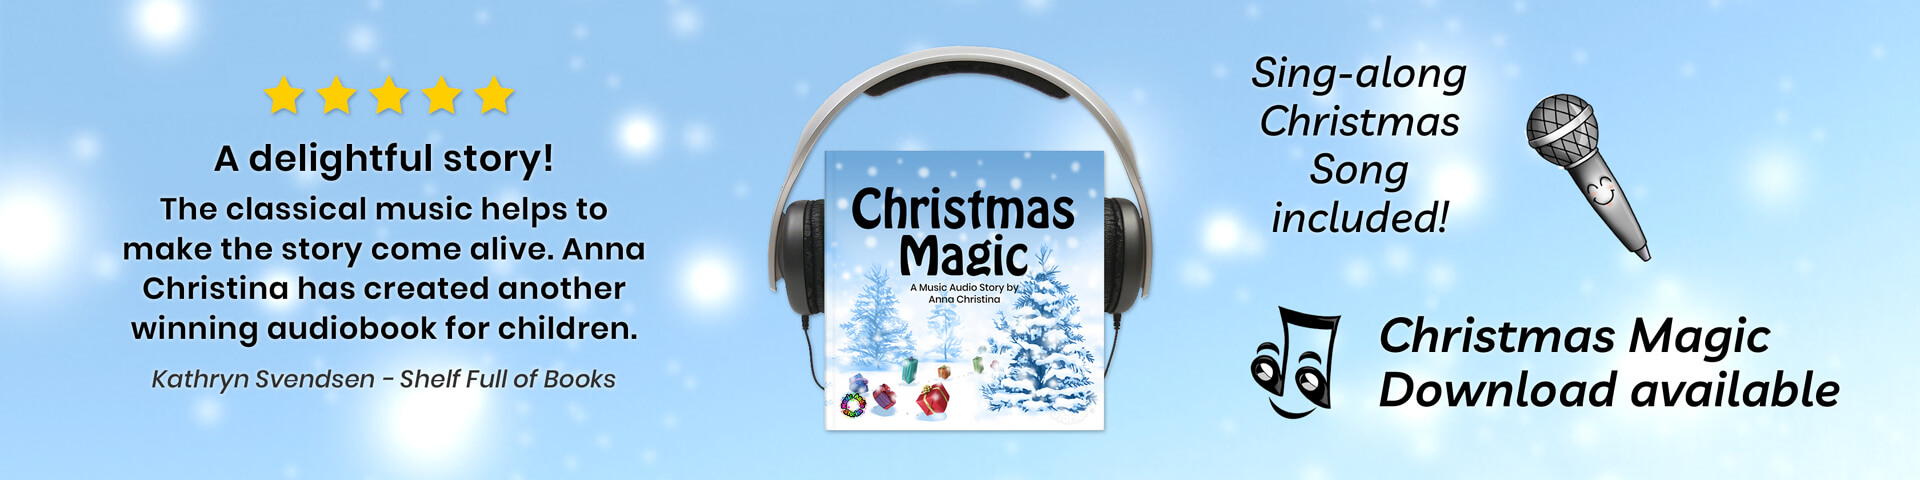 Music Audio Stories Christmas Magic banner image